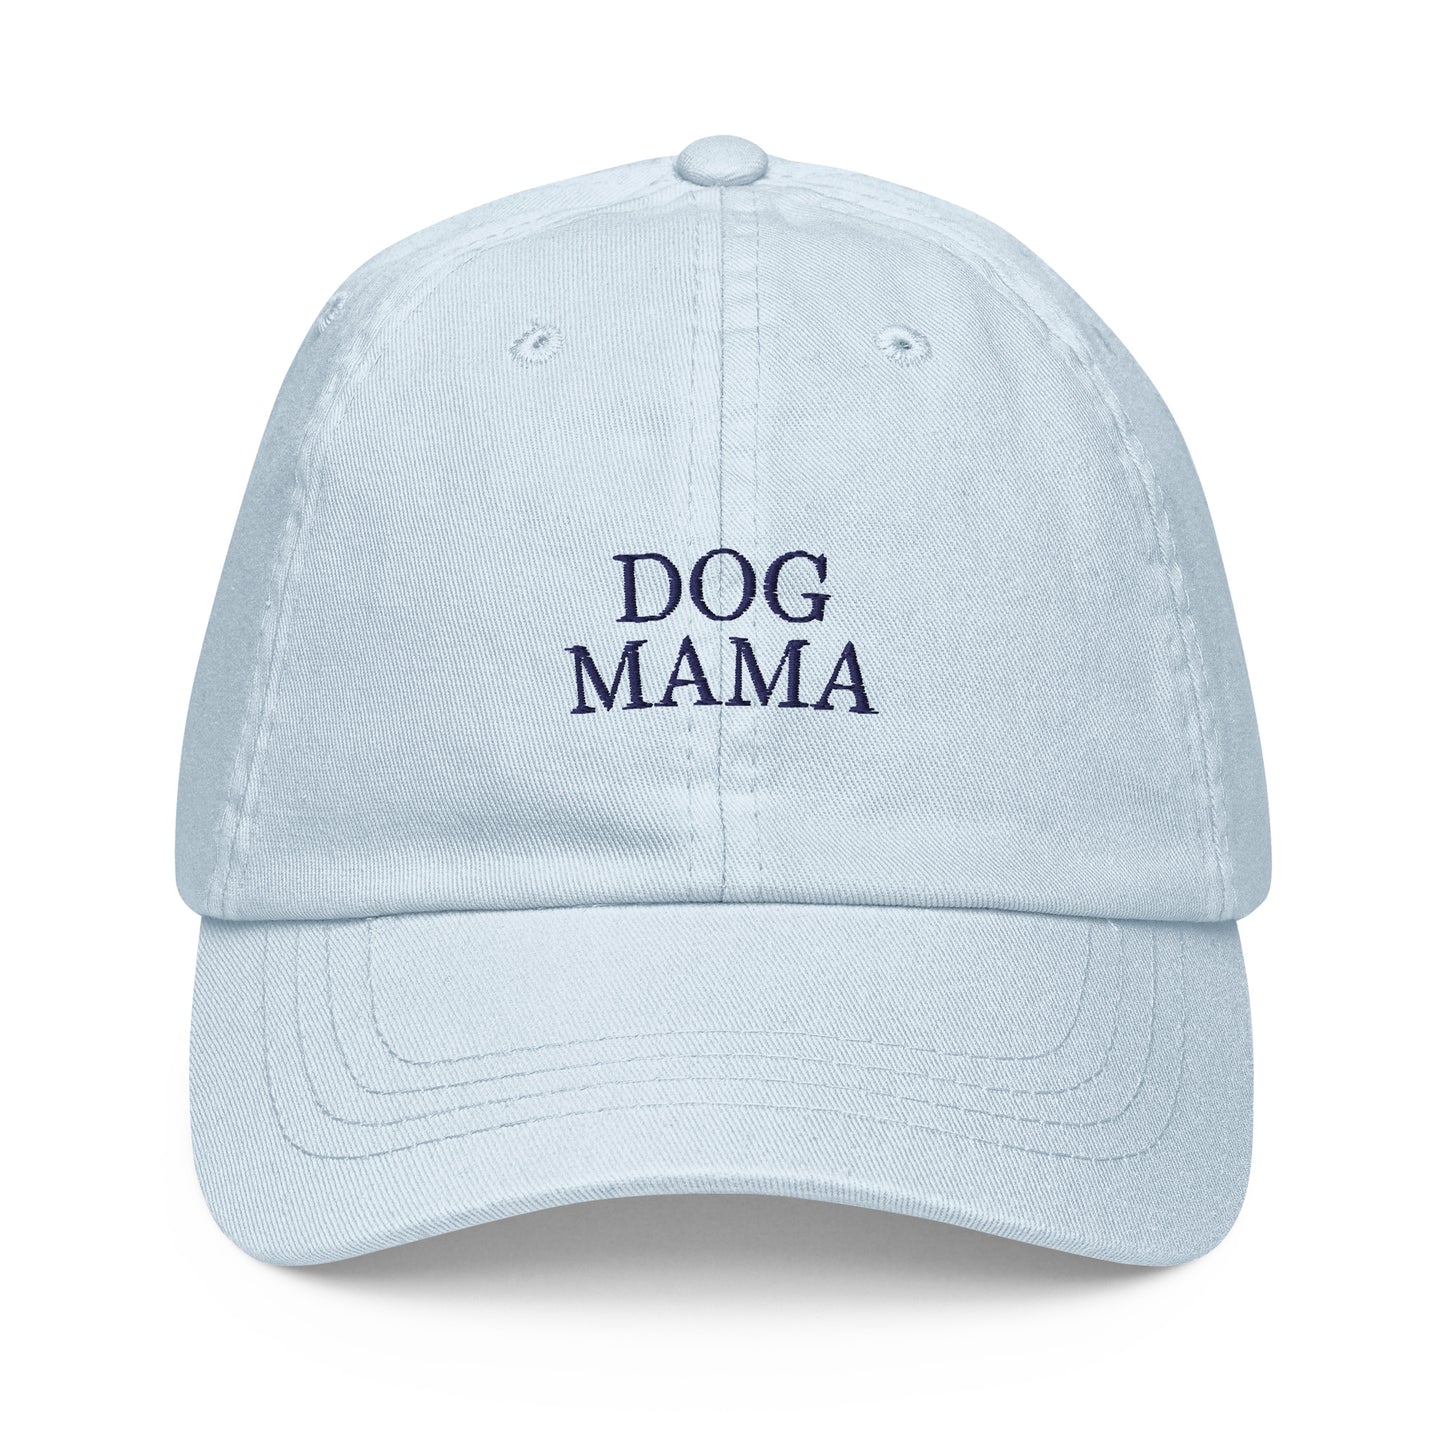 Dog Mama Pastel Hat